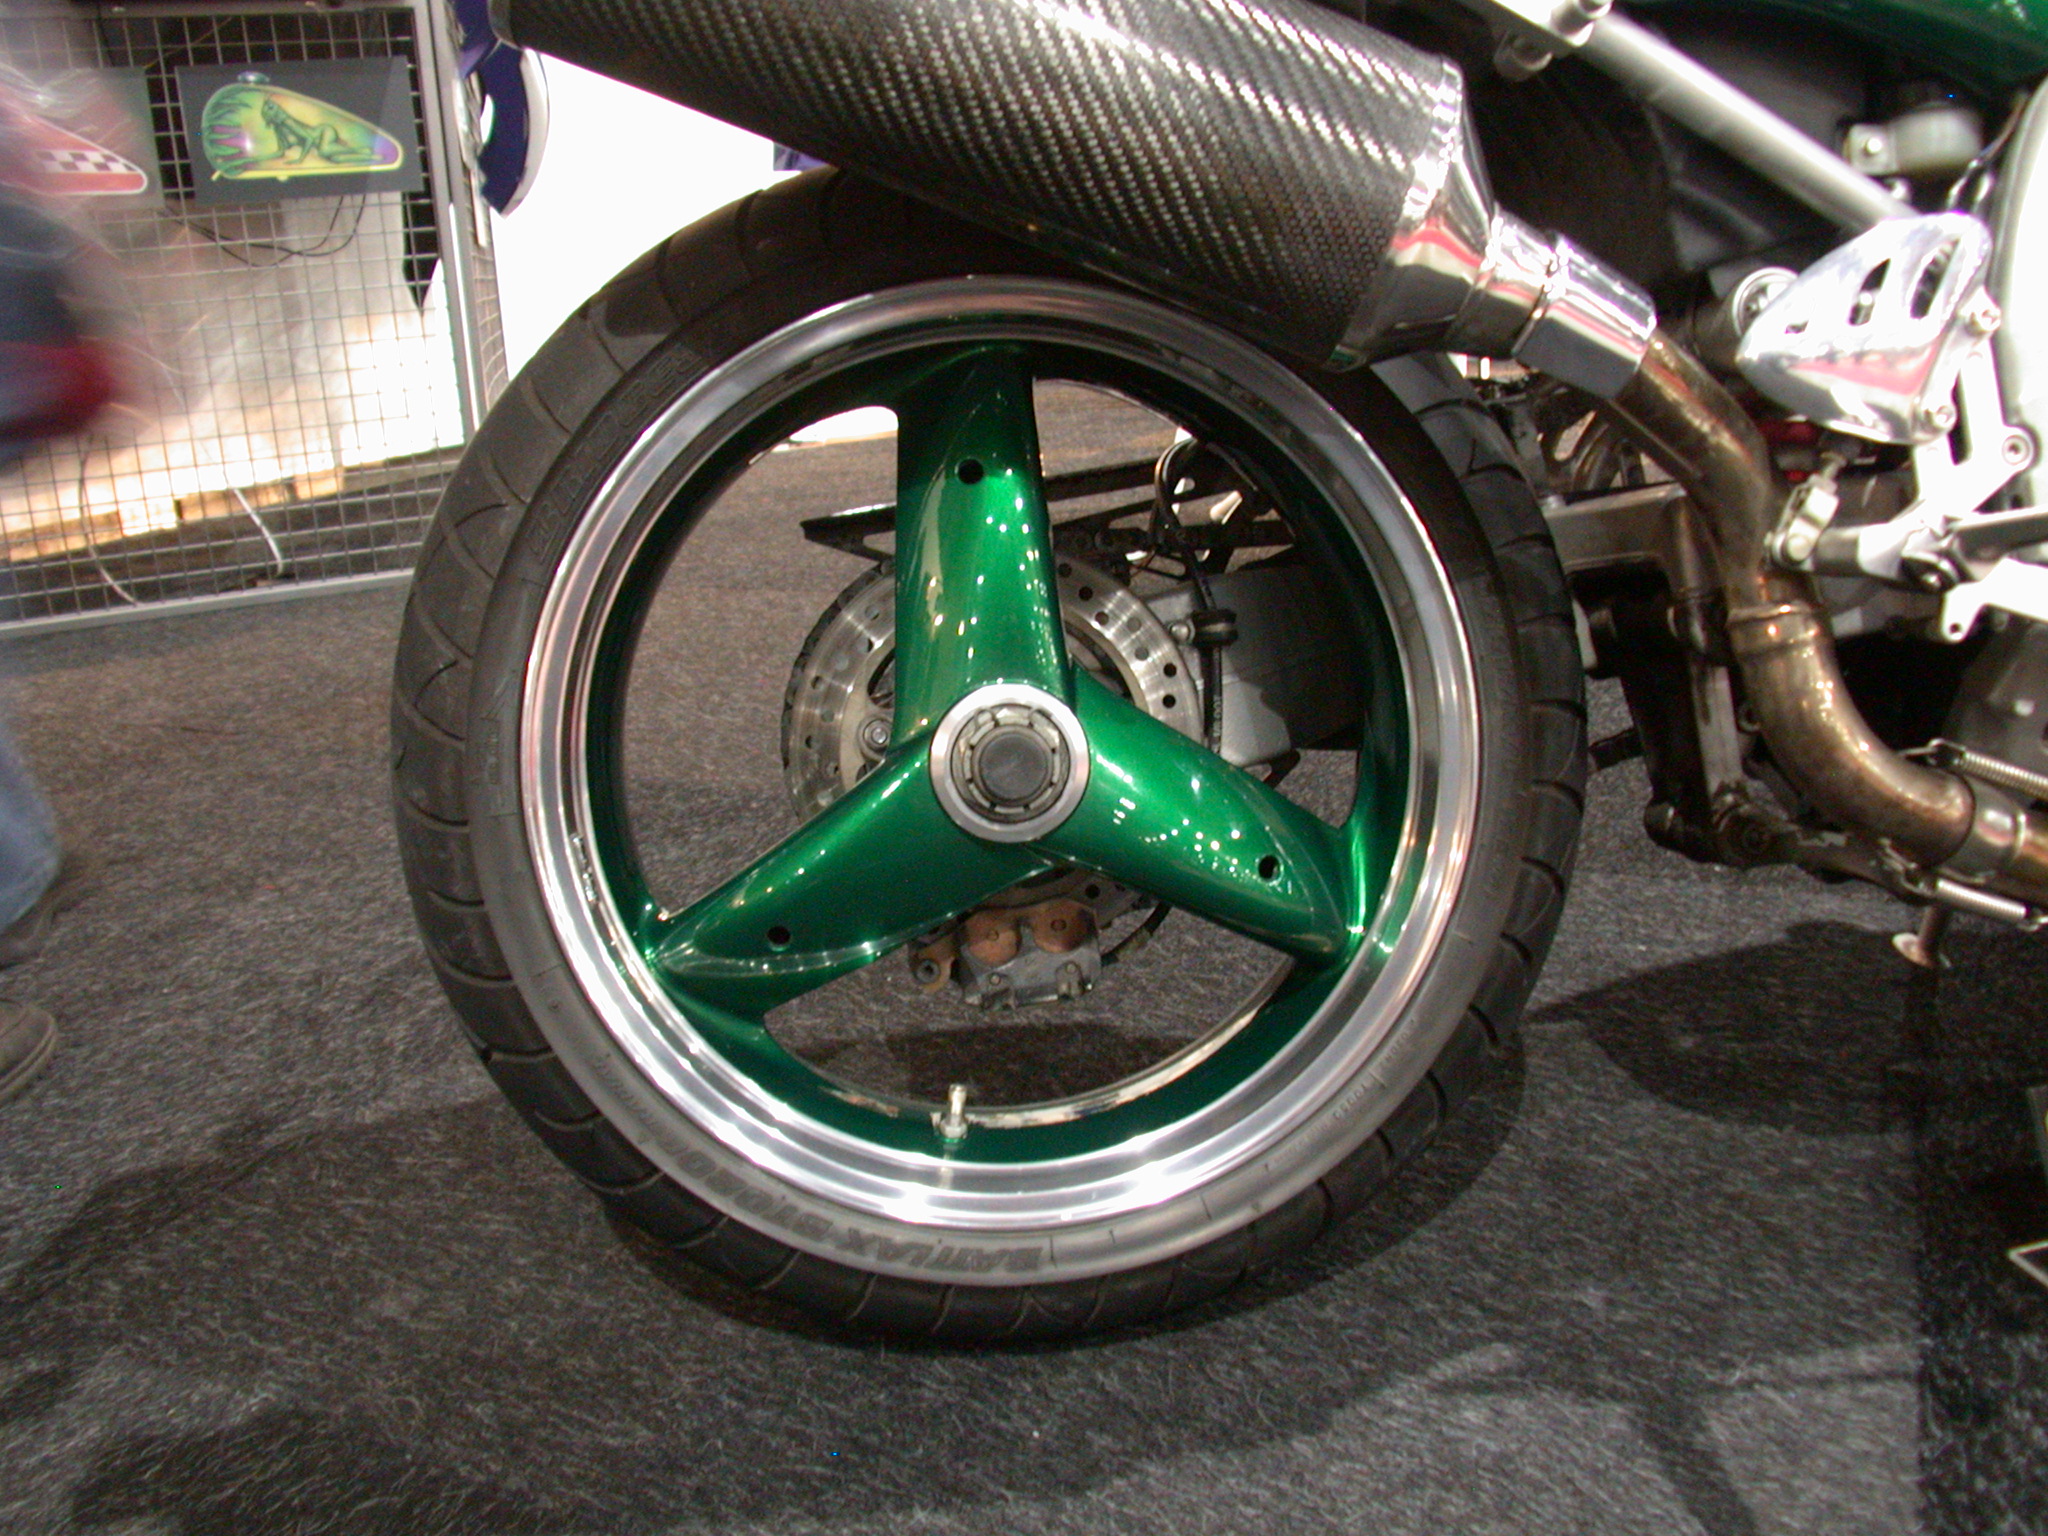 scooter motor backwheel back wheel round spoke spokes green spoiler